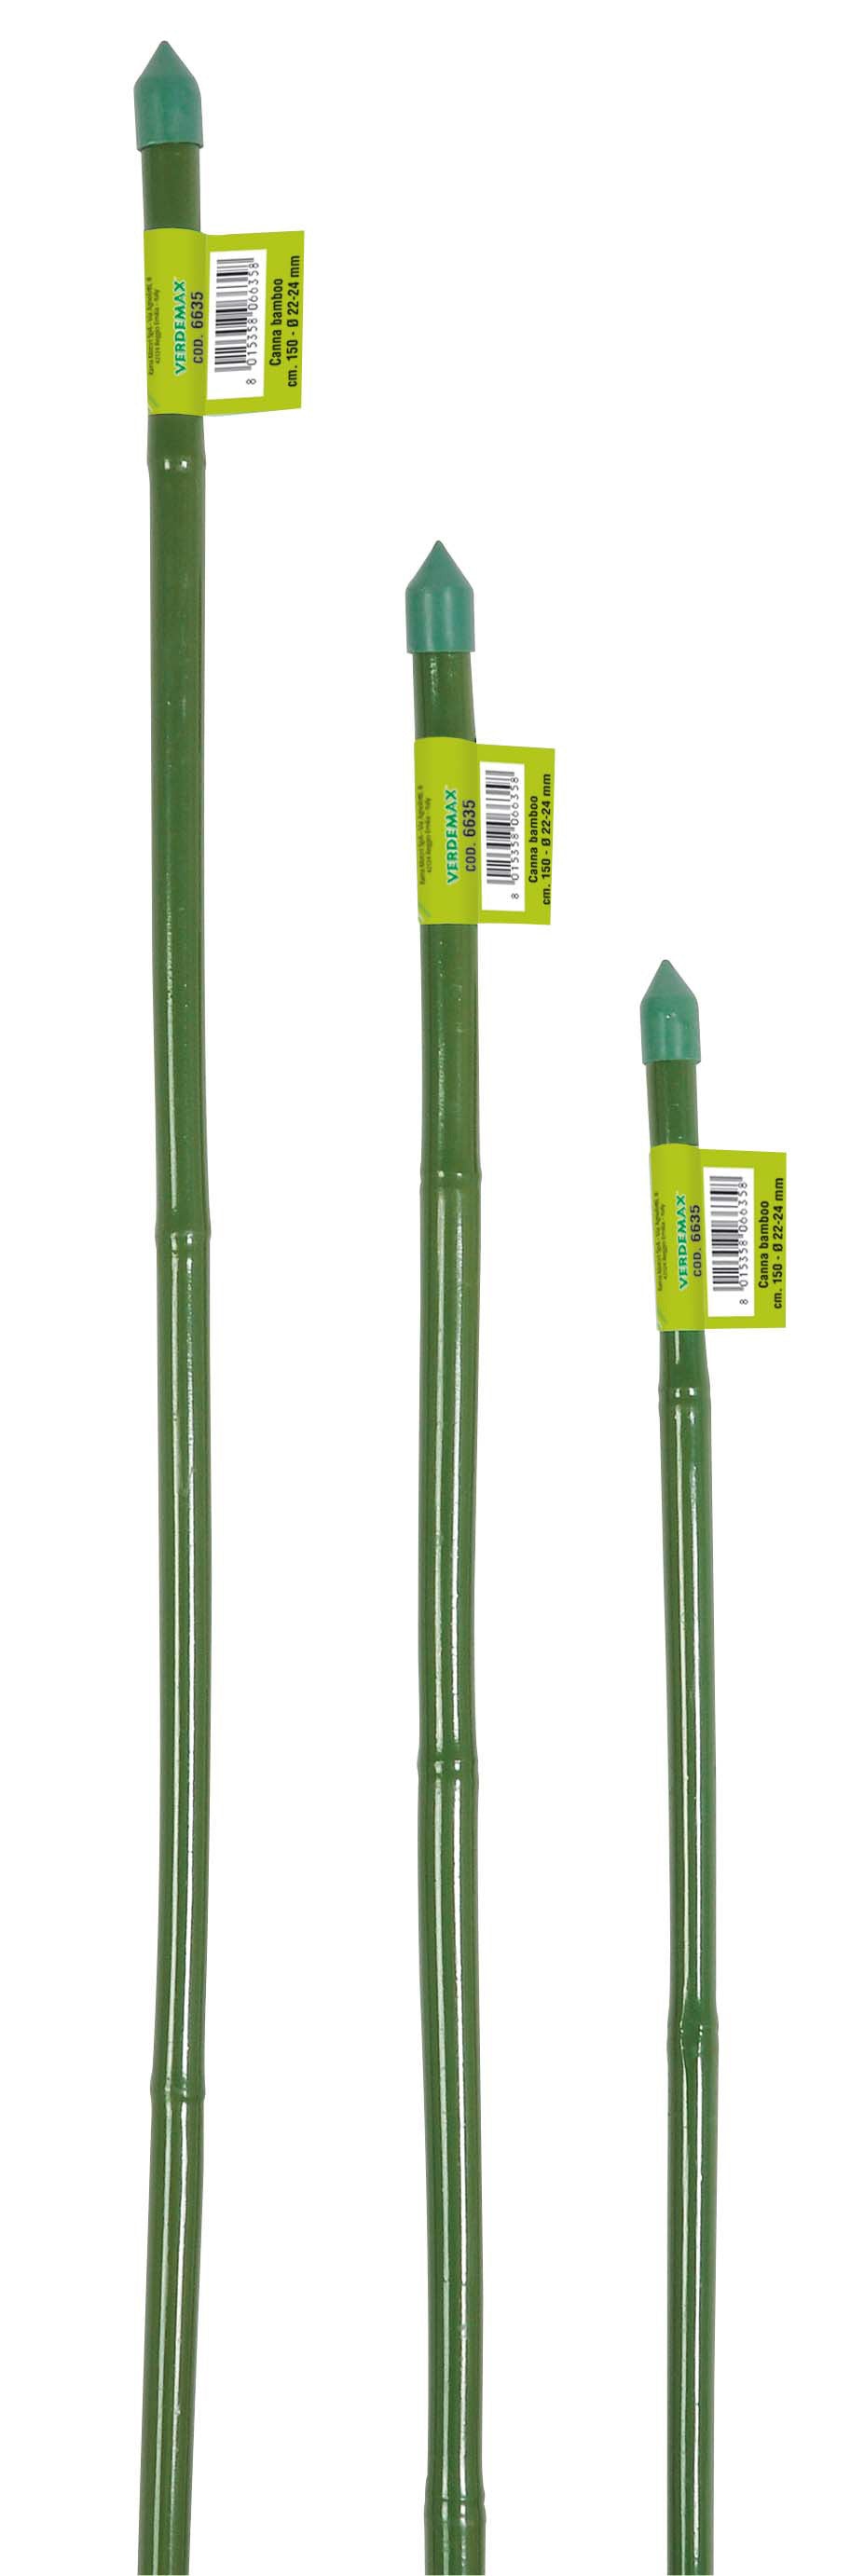 Tutore in bamboo plastificato cm. 180 d. 14-16